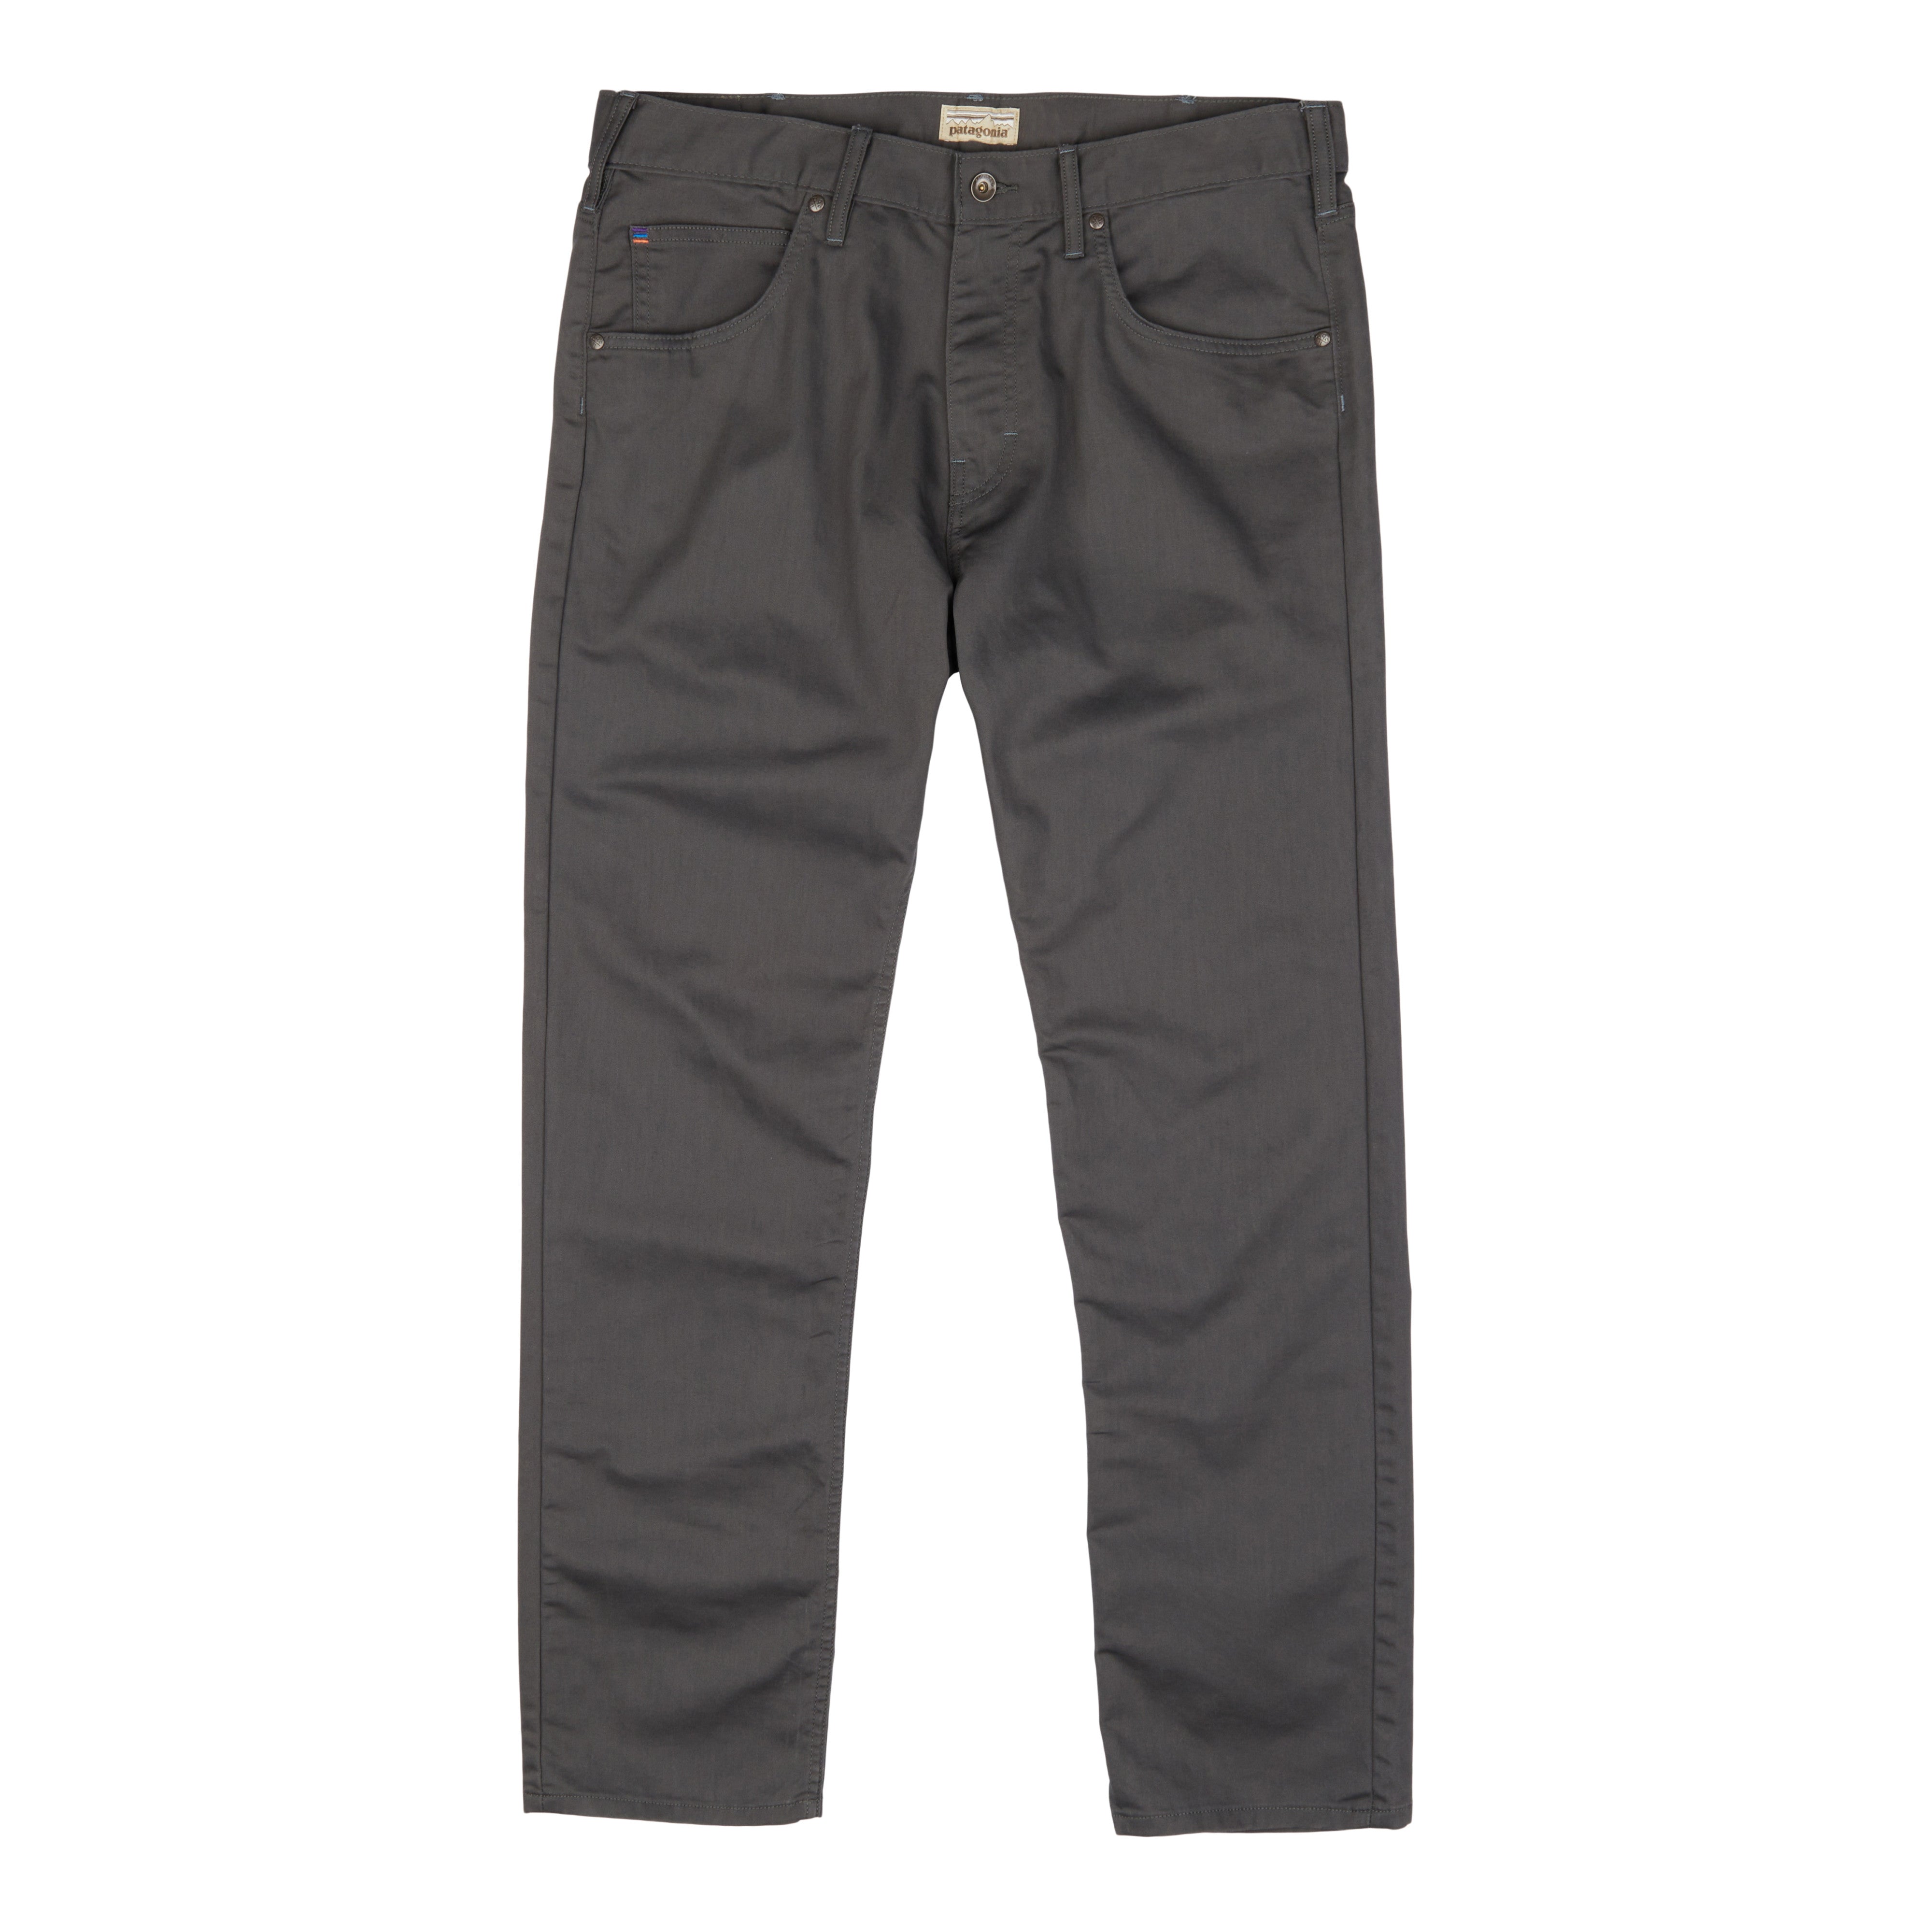 Used & Second Hand Patagonia Pants | Patagonia® Worn Wear 